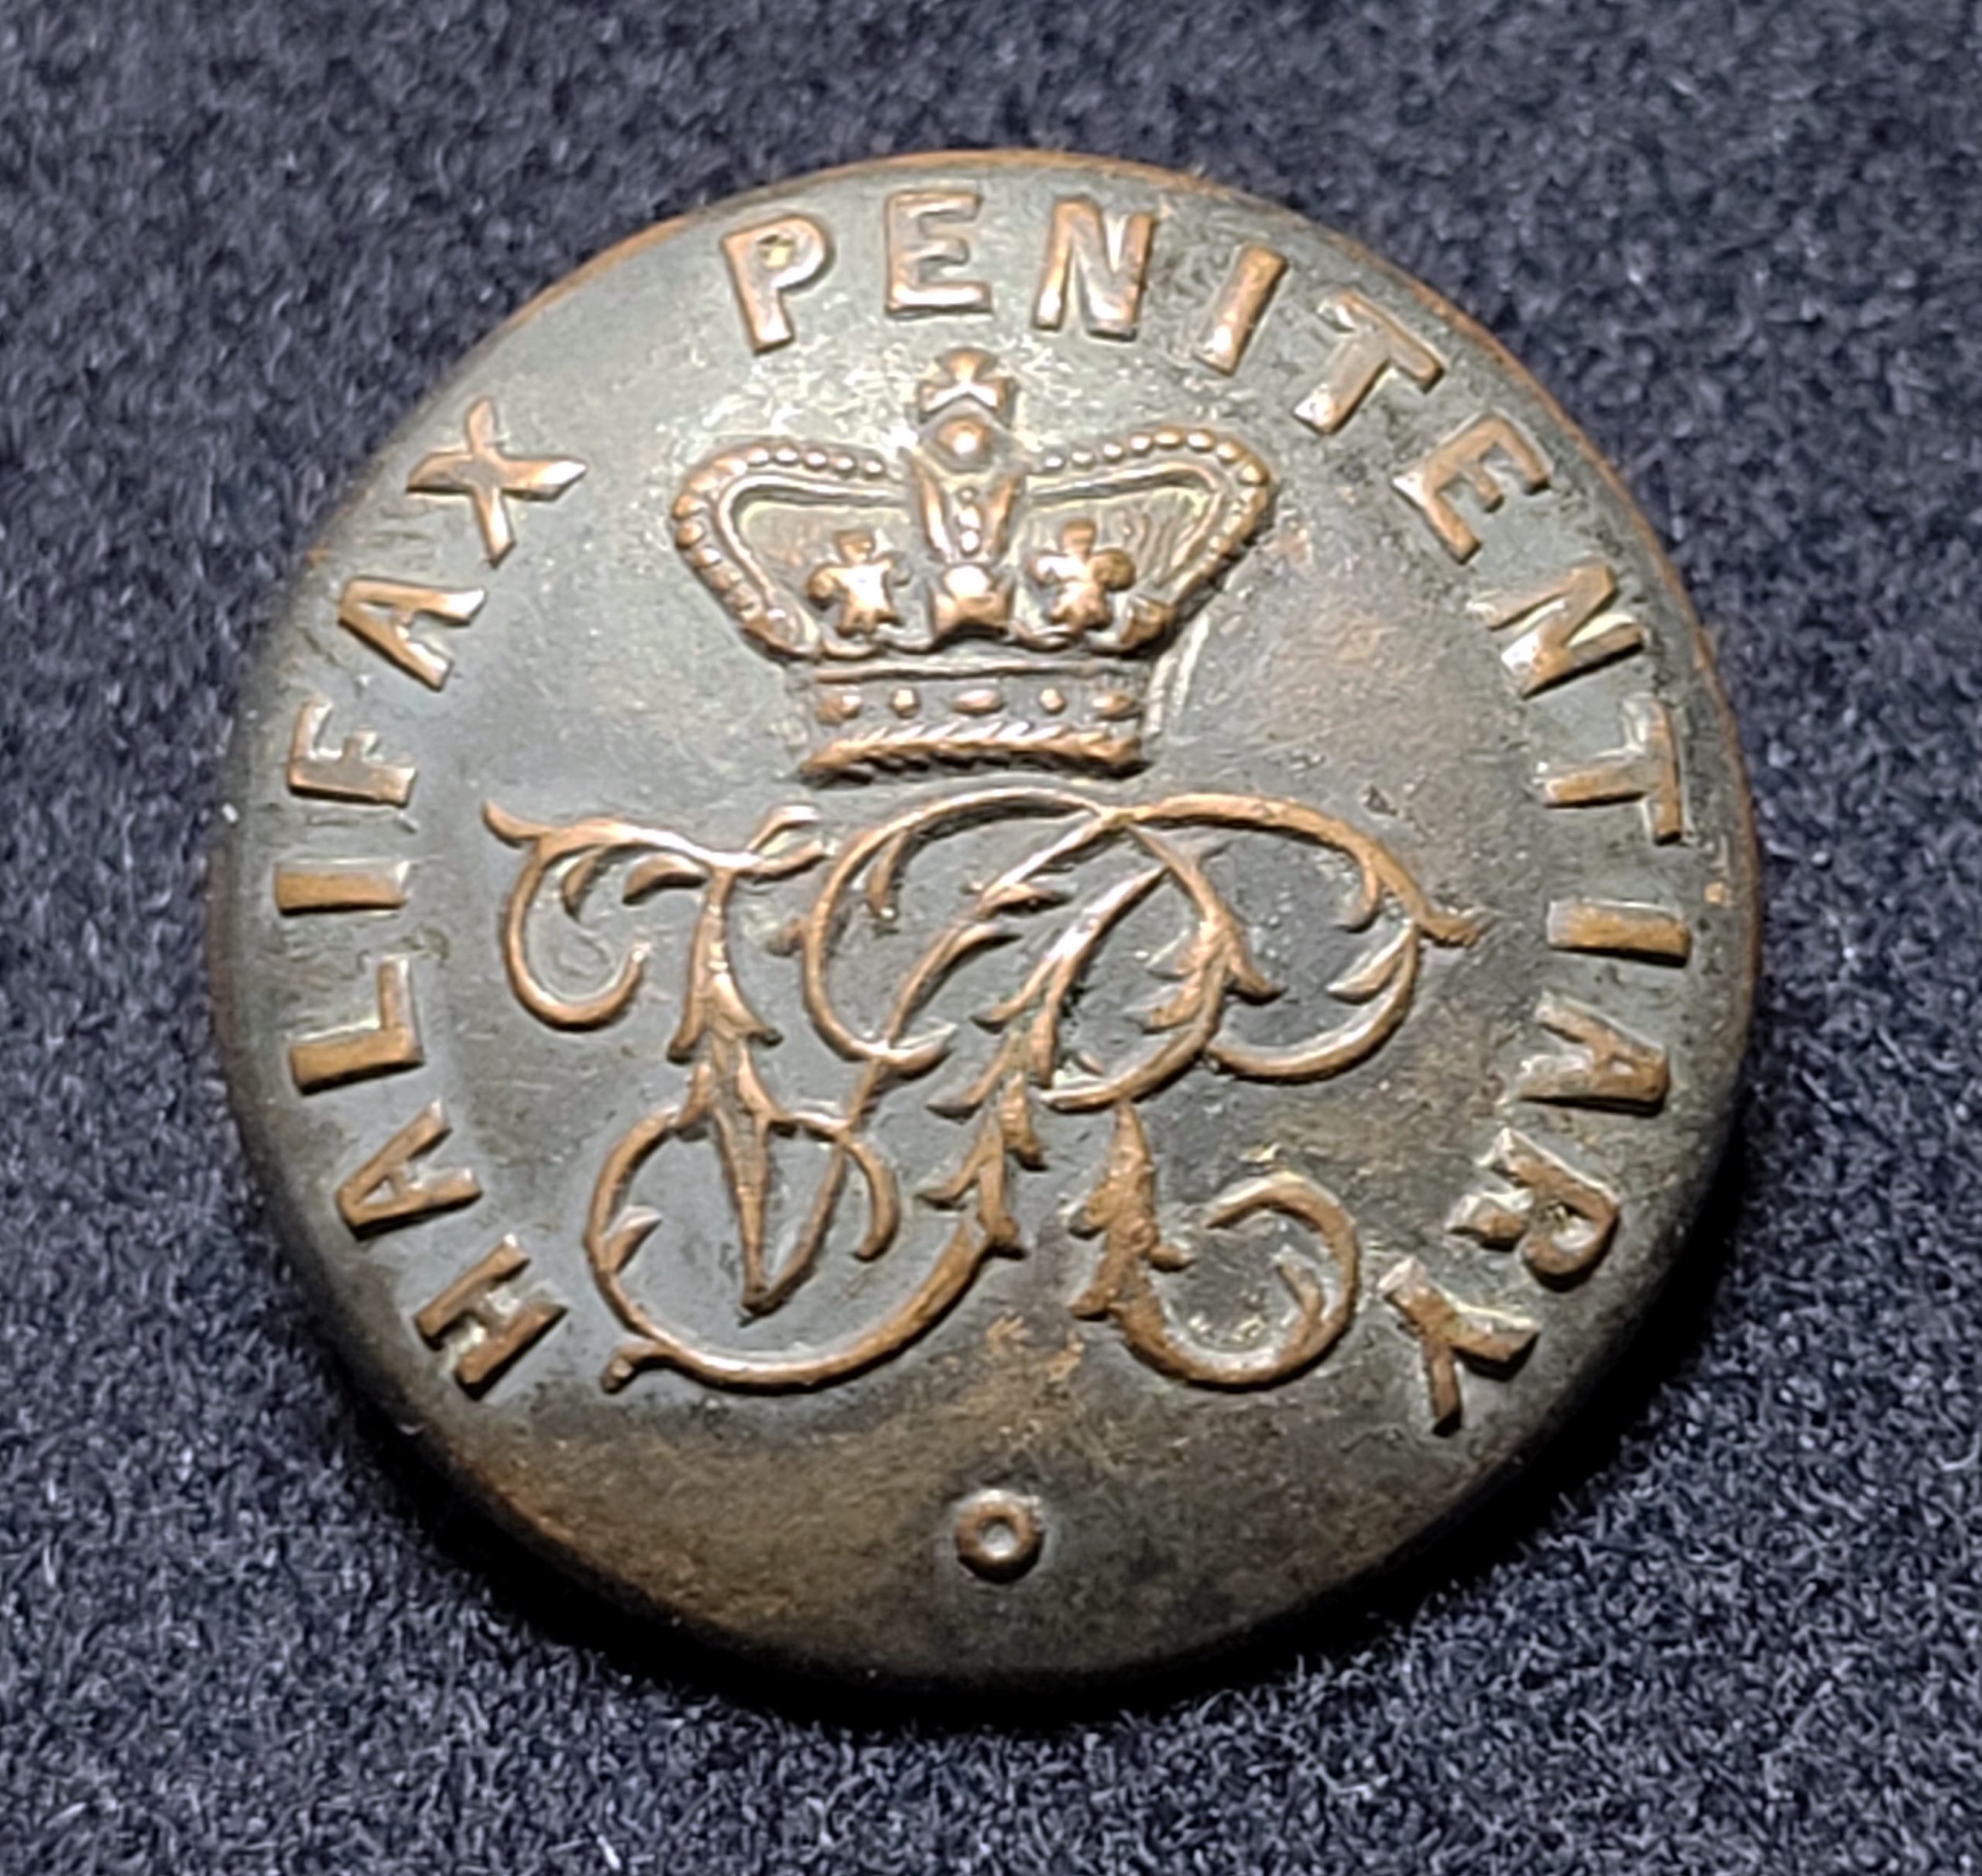 Halifax Pen tunic button